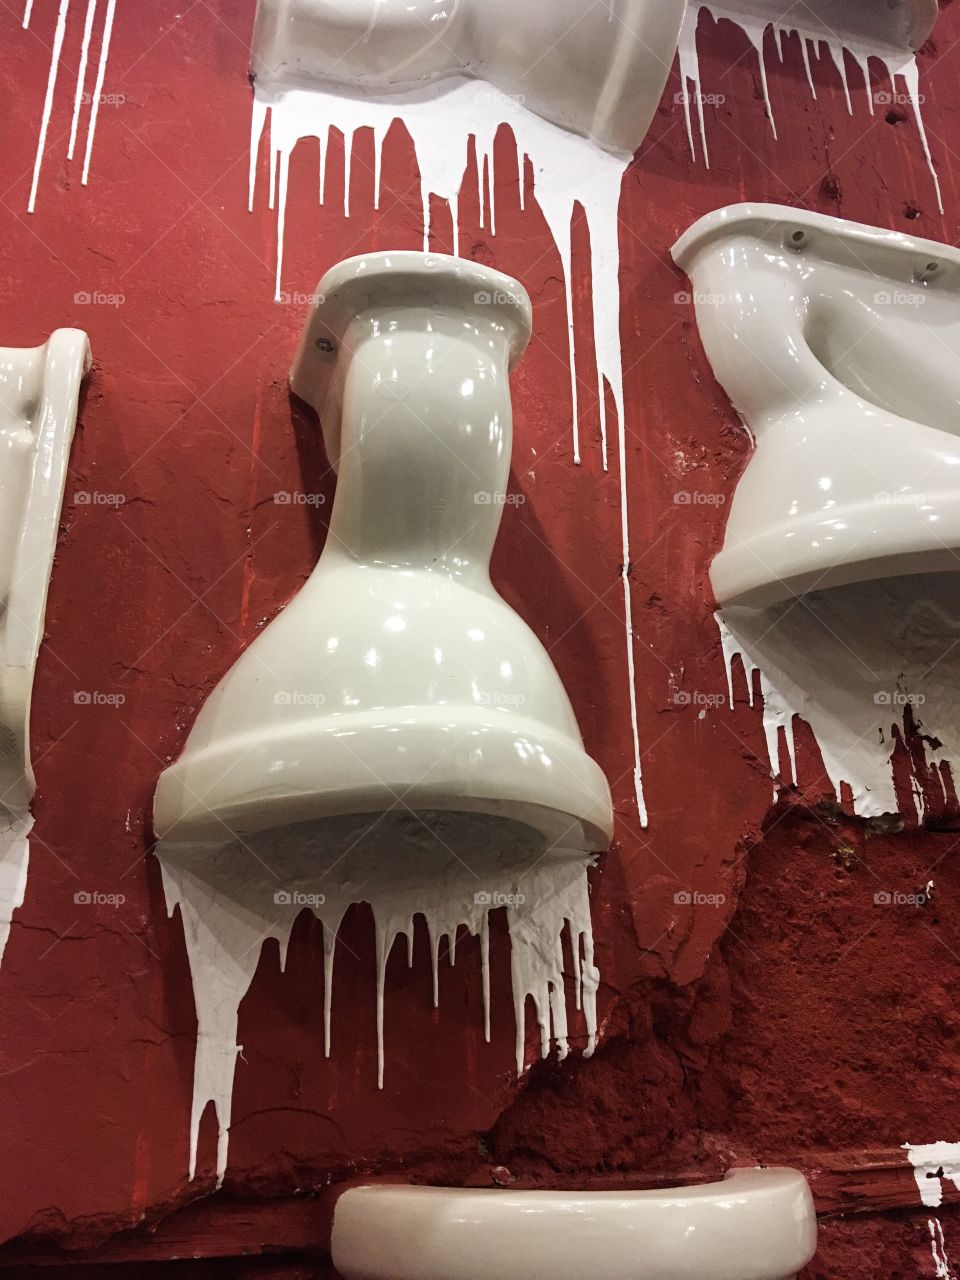 The ceramic toilet pan as an art decoration. 